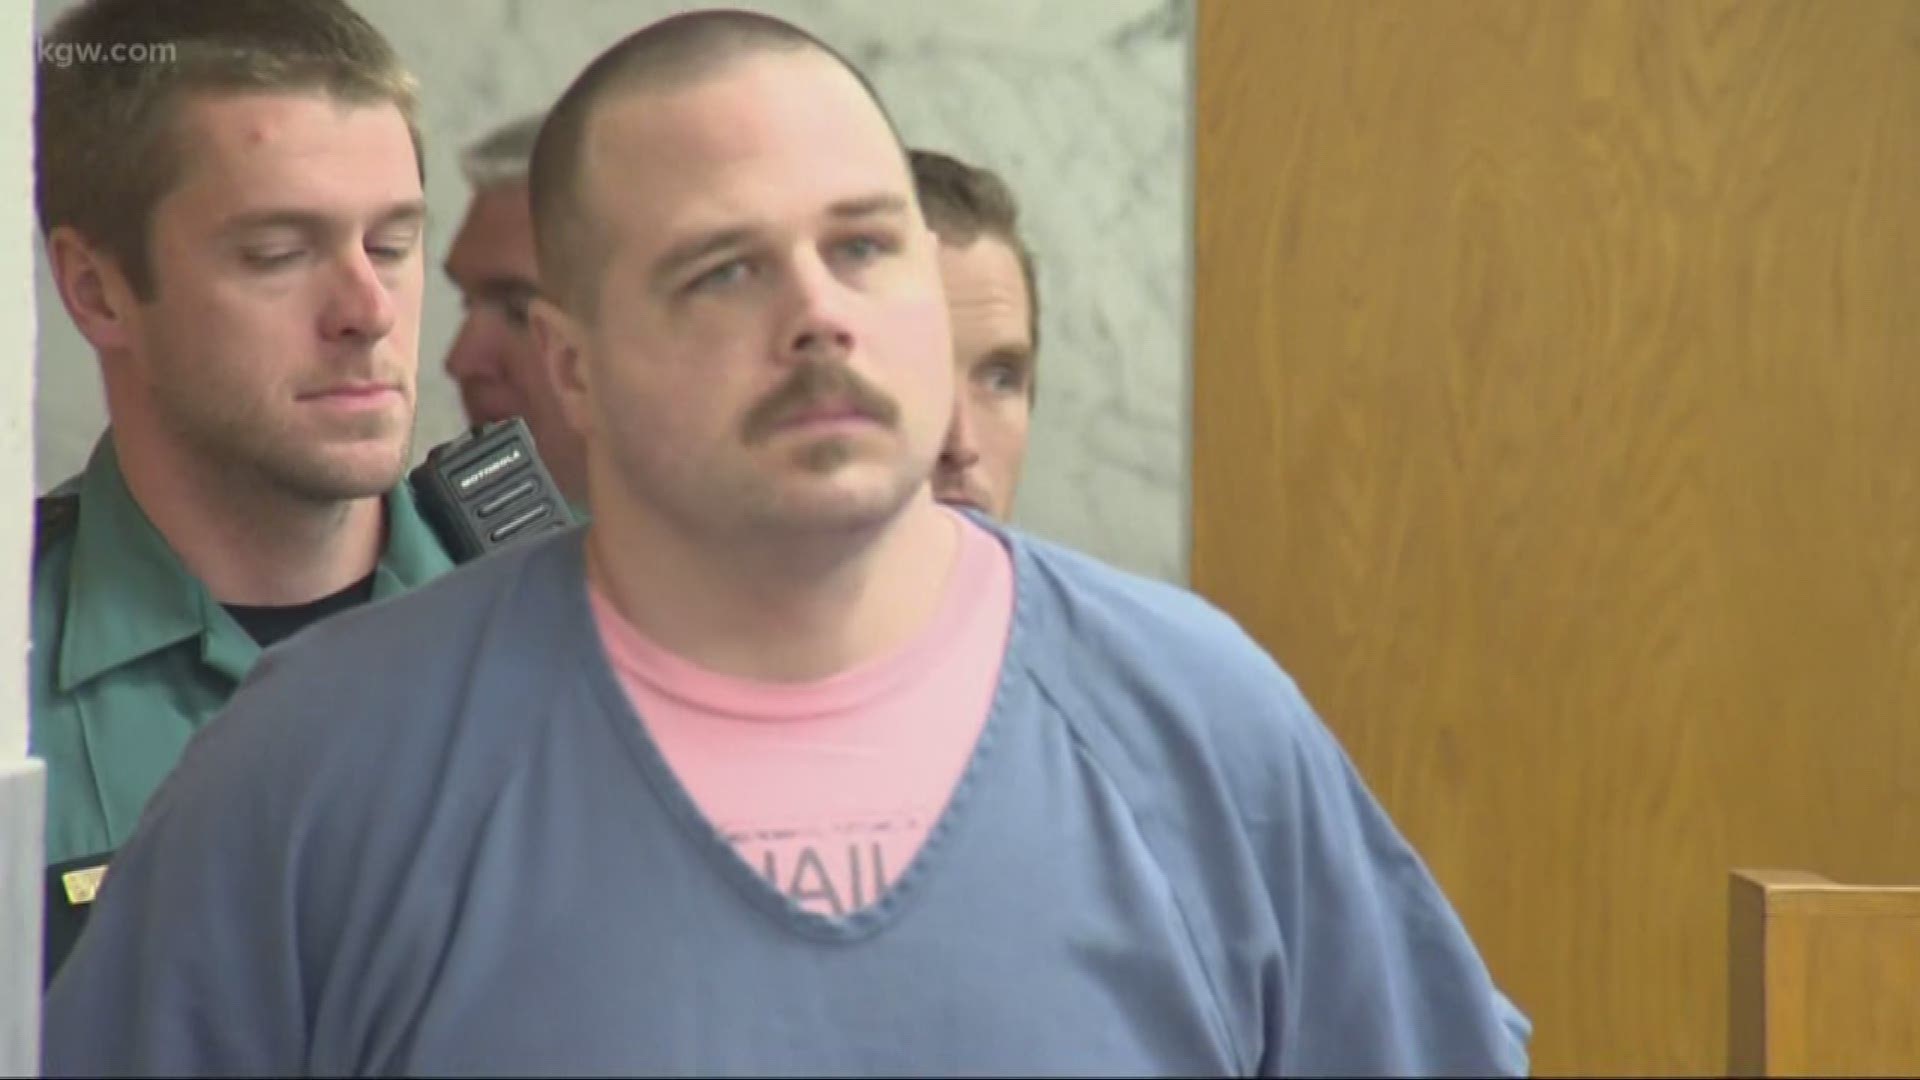 Death sentence expert testifies at MAX attack suspect pretrial hearing